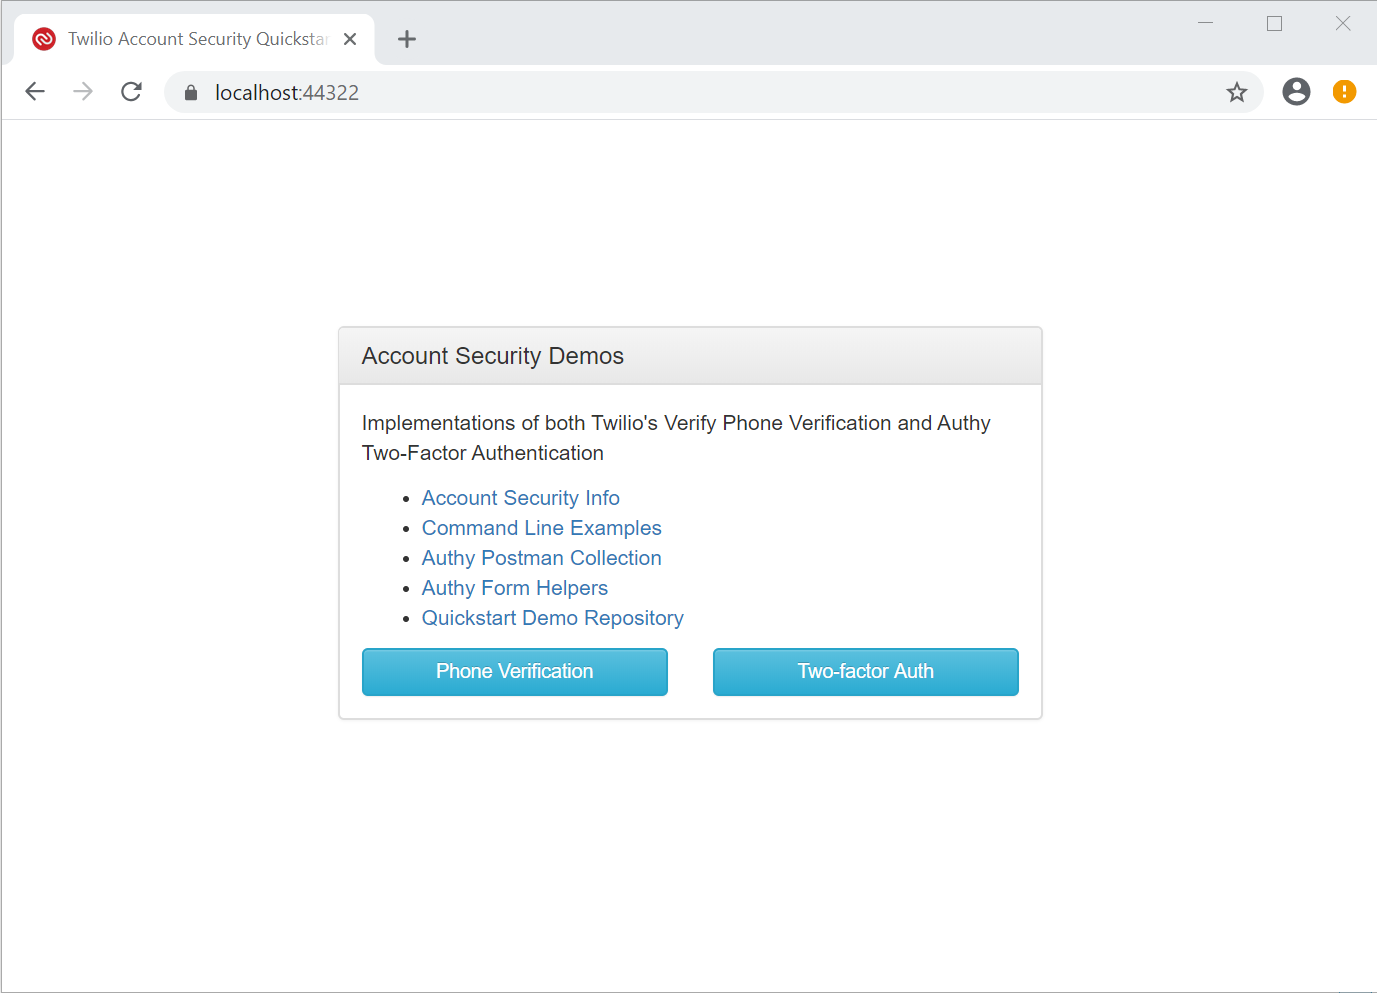 Twilio Account Security Quickstart home page